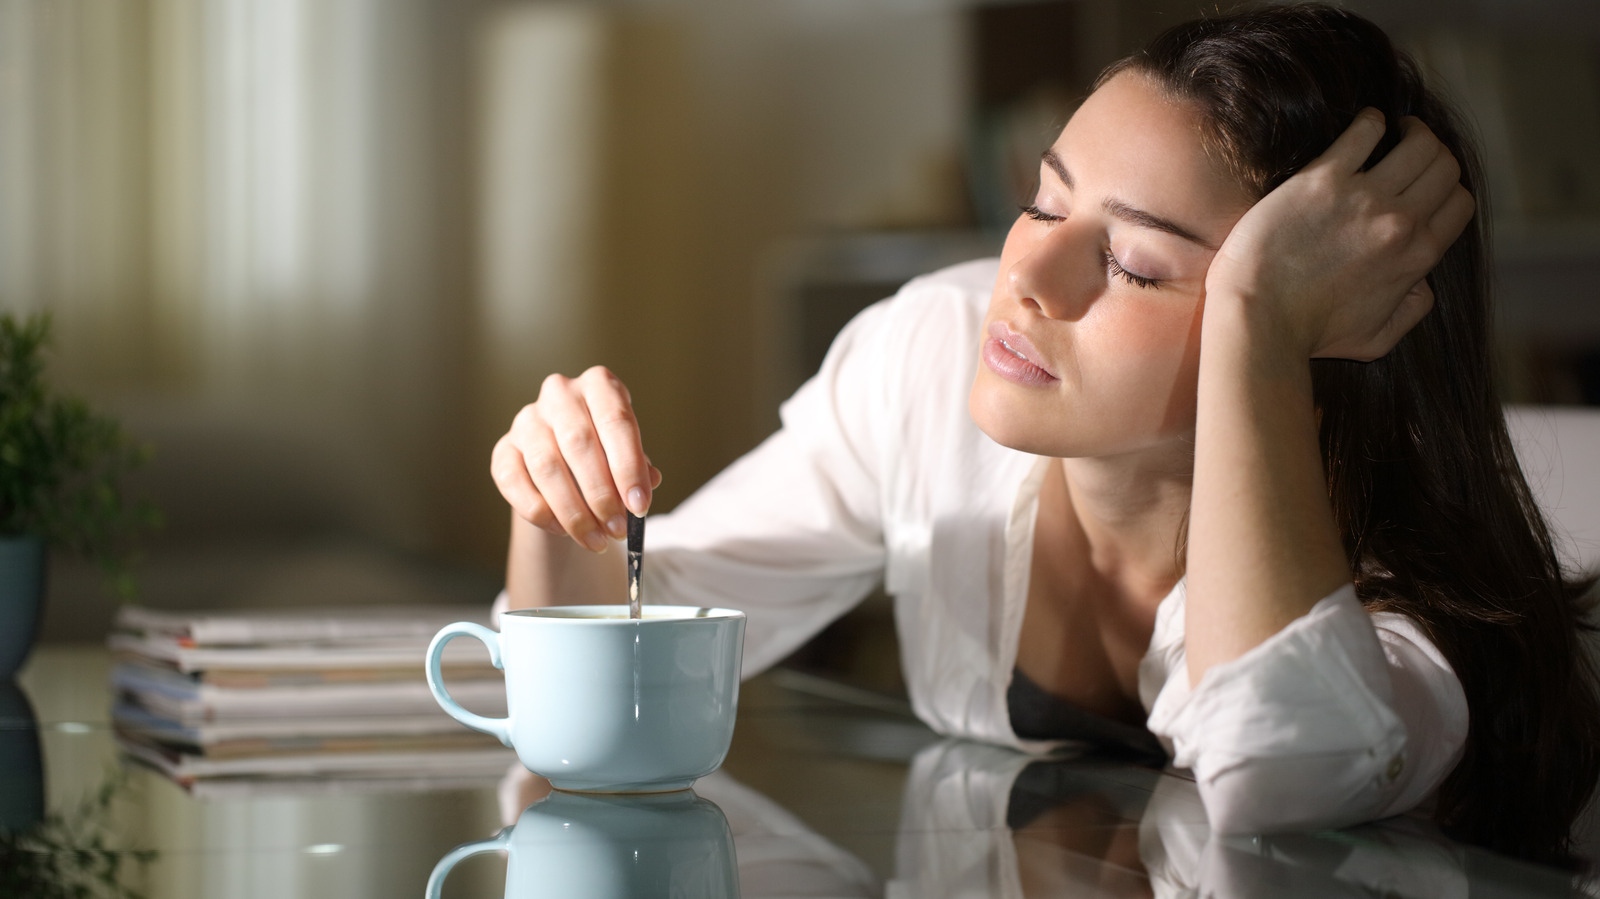 You can overcome the challenges of sleep apnea